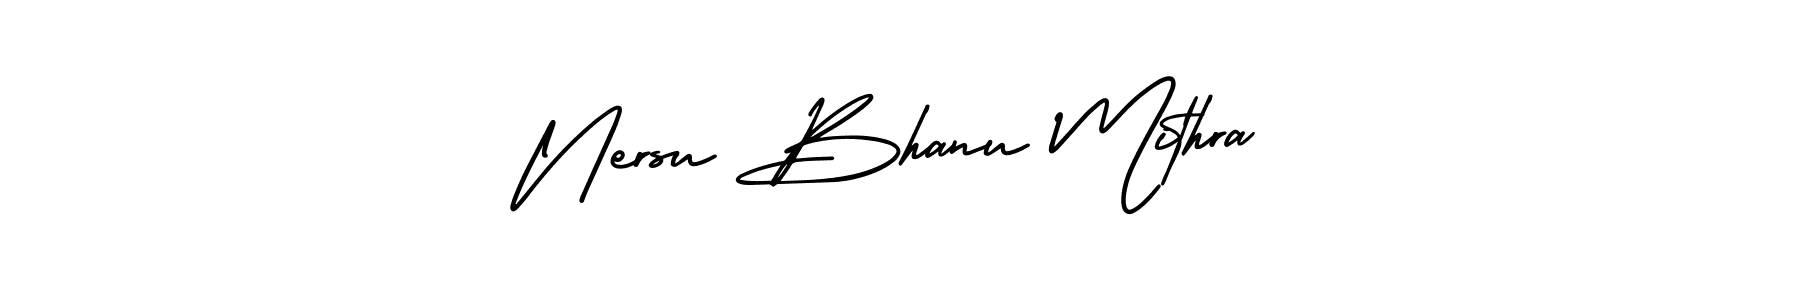 How to Draw Nersu Bhanu Mithra signature style? AmerikaSignatureDemo-Regular is a latest design signature styles for name Nersu Bhanu Mithra. Nersu Bhanu Mithra signature style 3 images and pictures png